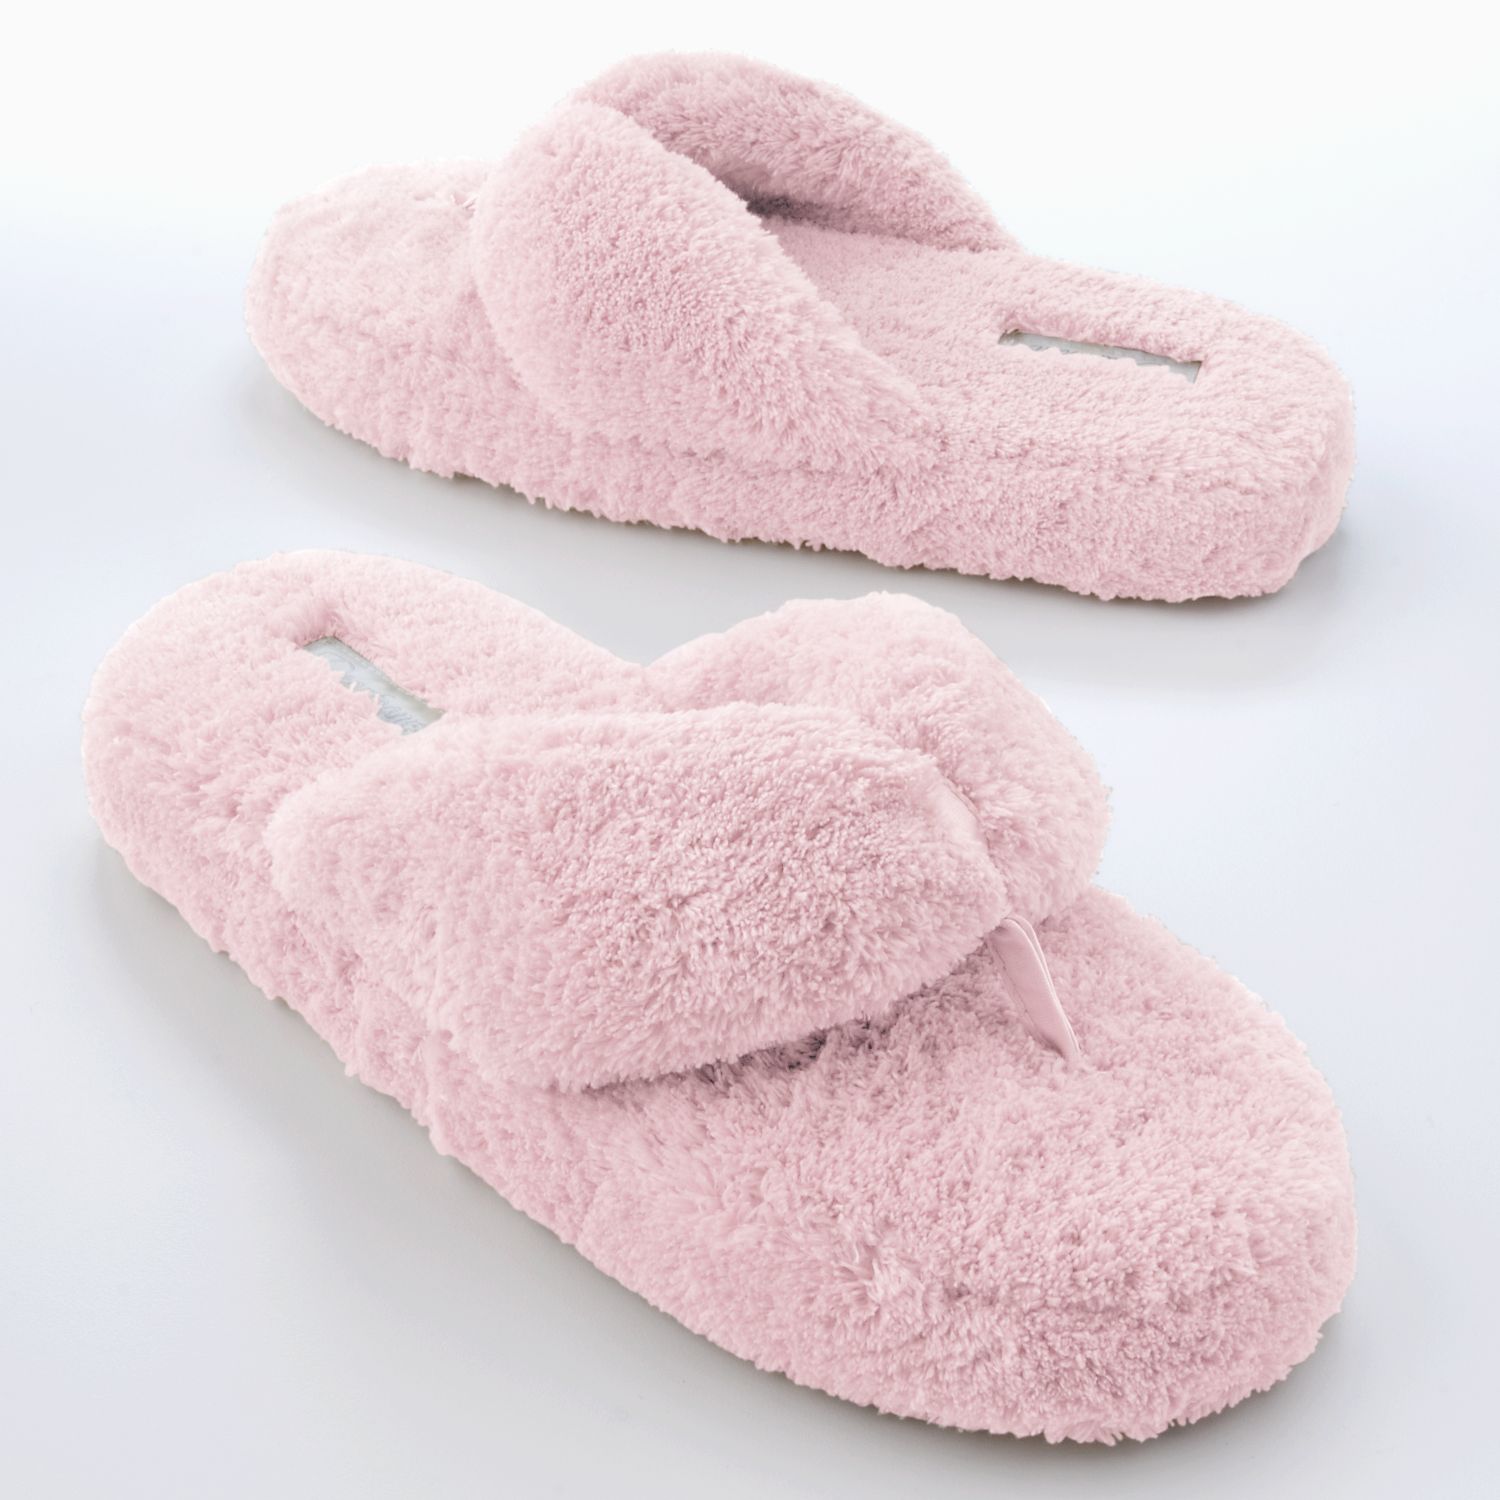 plush thong slippers